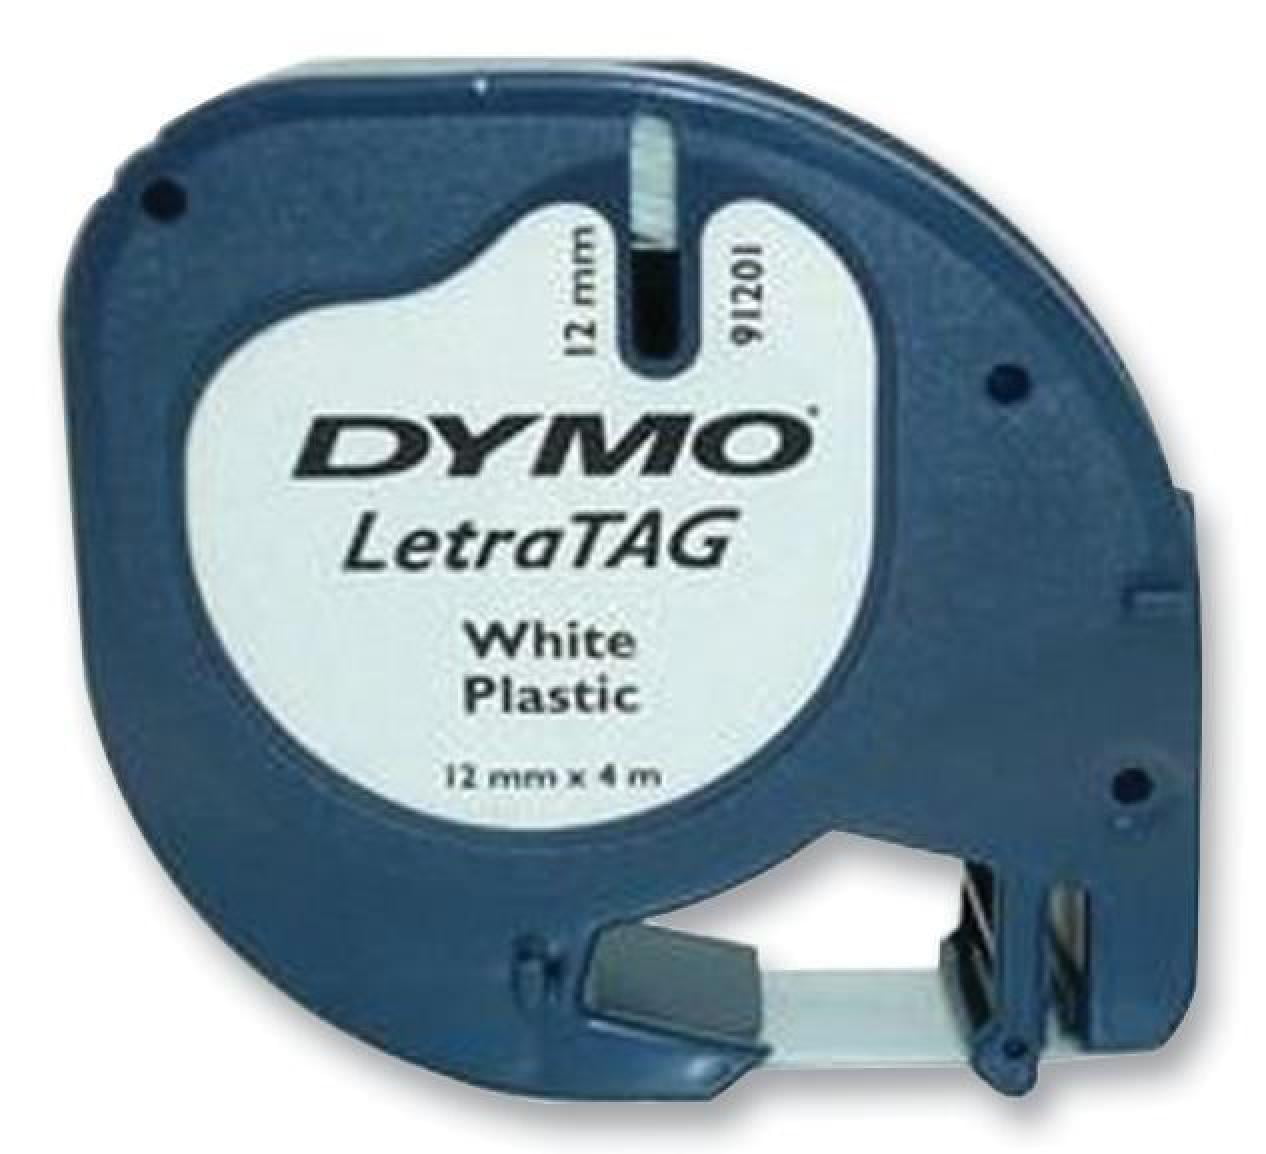 Recharge étiqueteuse Dymo 12mmX4m Blanche - Cmc Fournitures